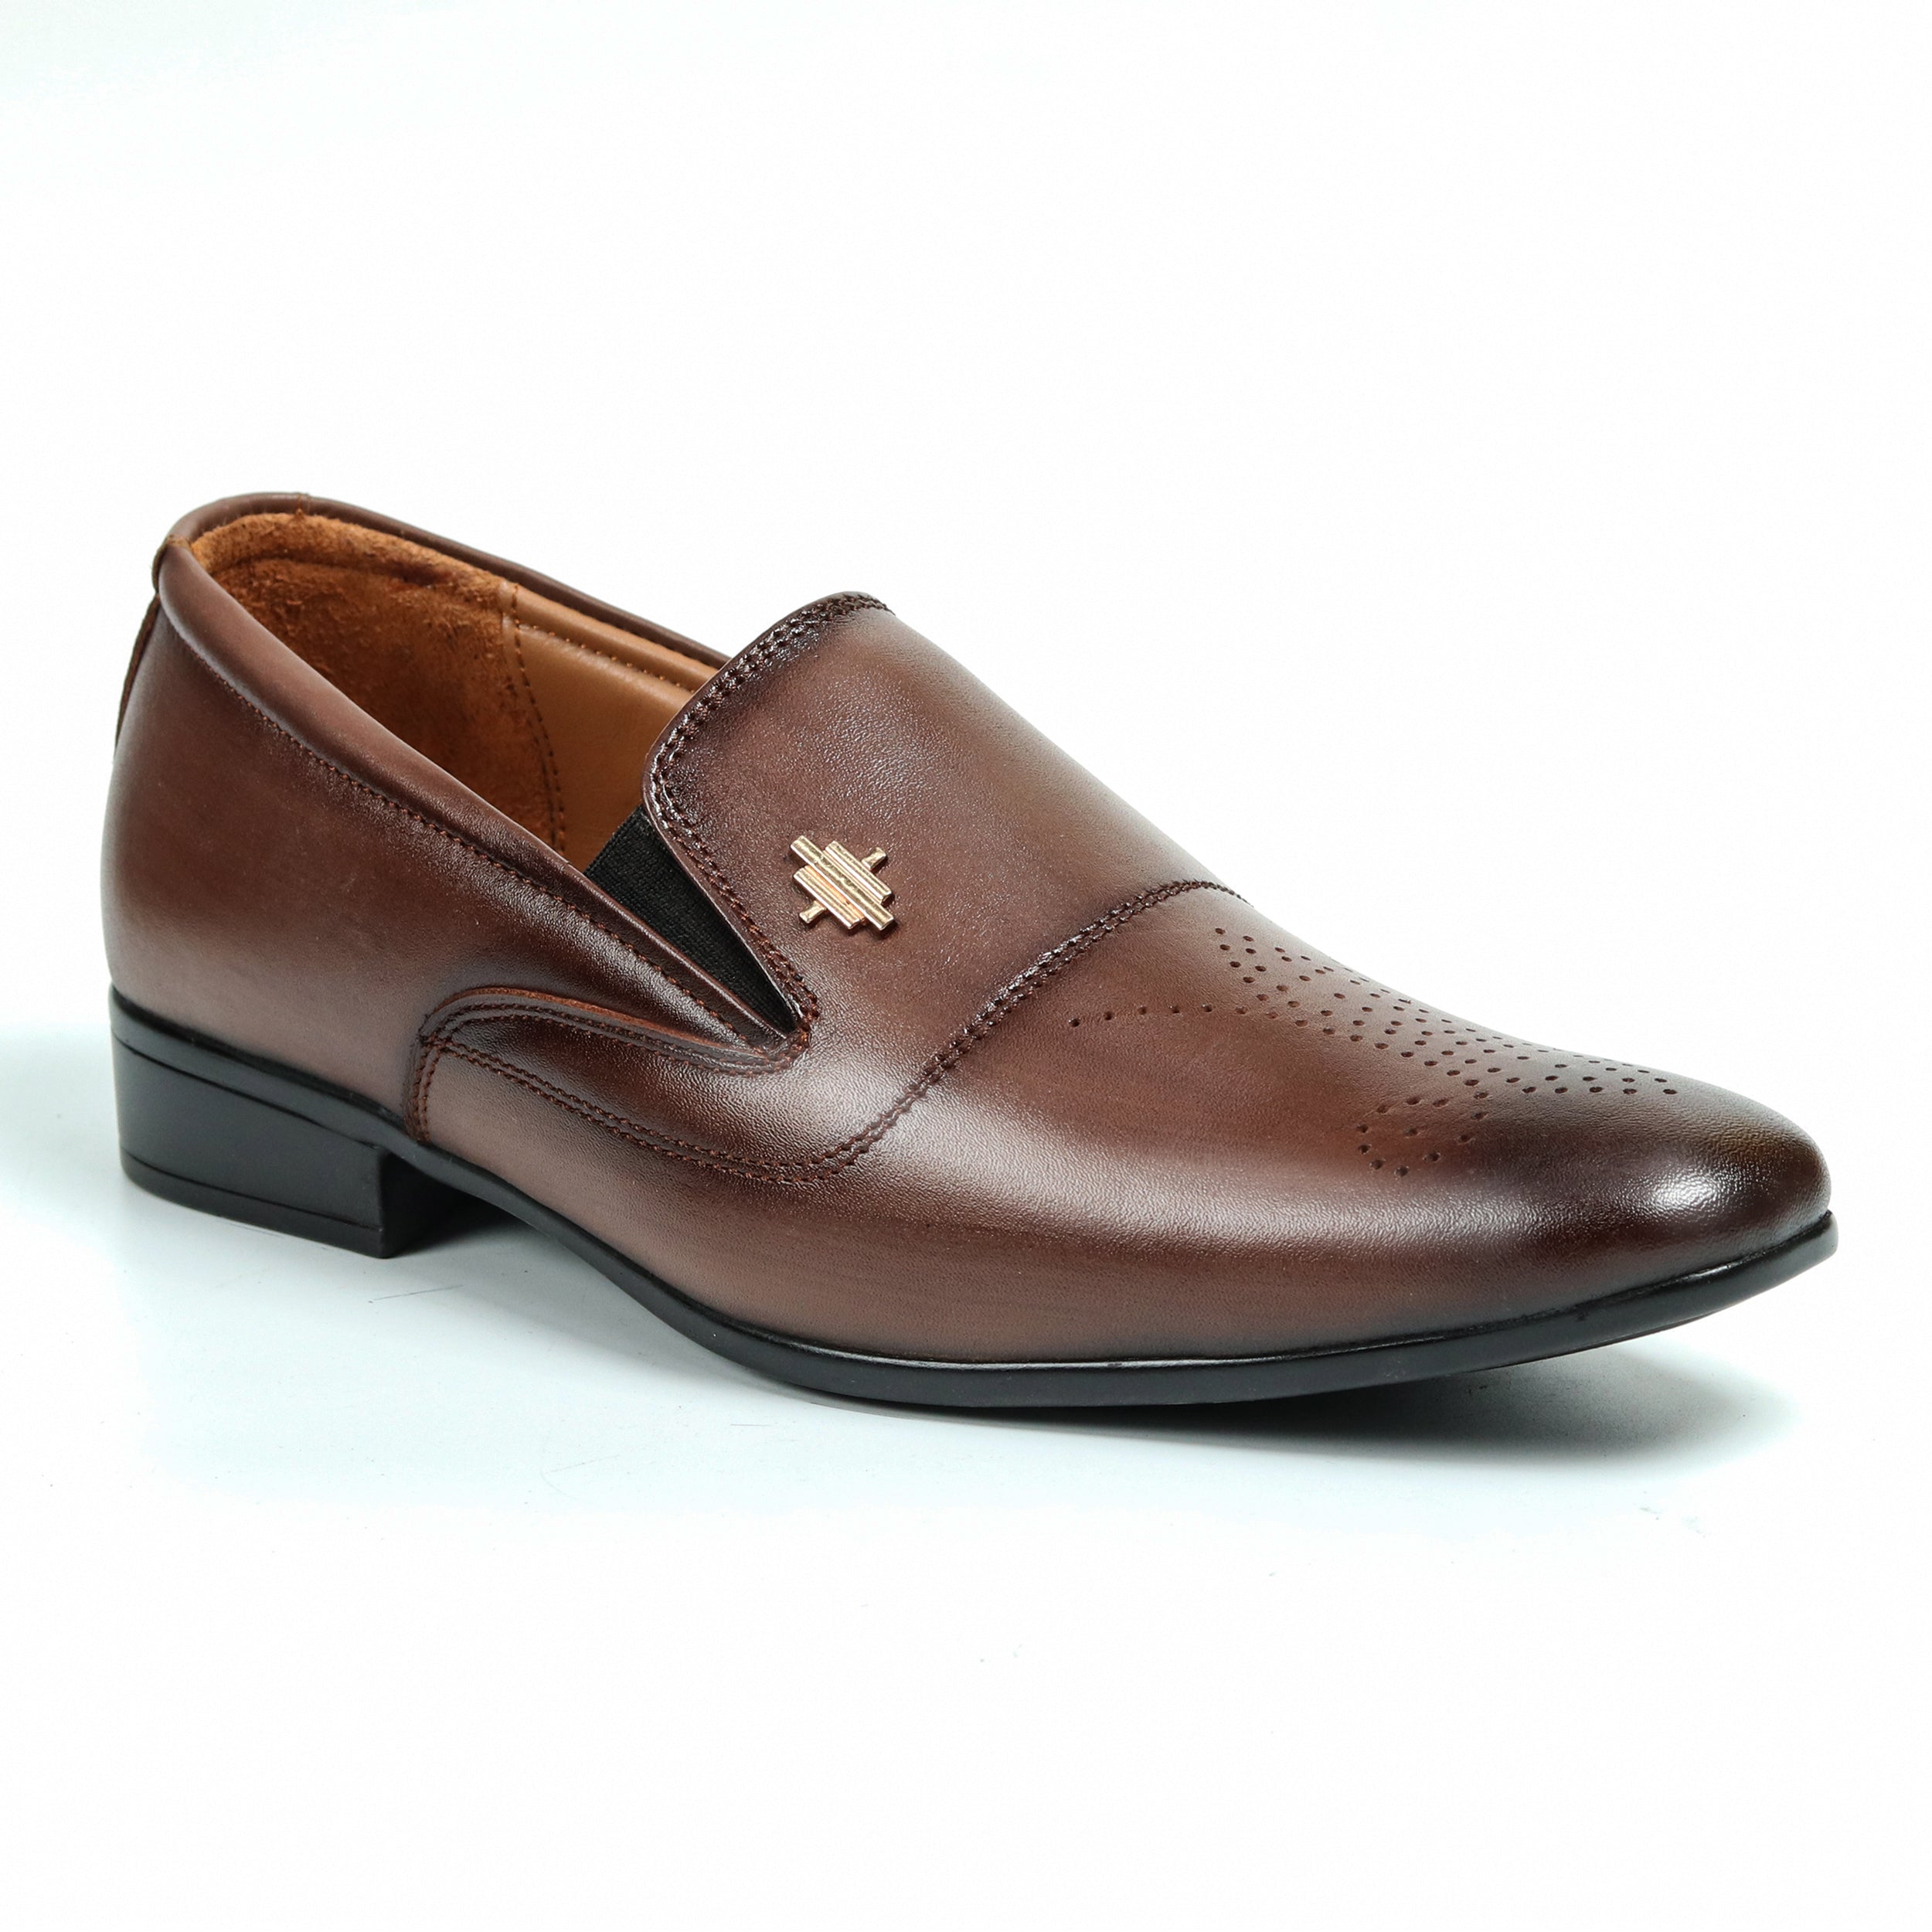 Zays Leather Premium Formal Shoe For Men (Brown) - ZAYSSF05